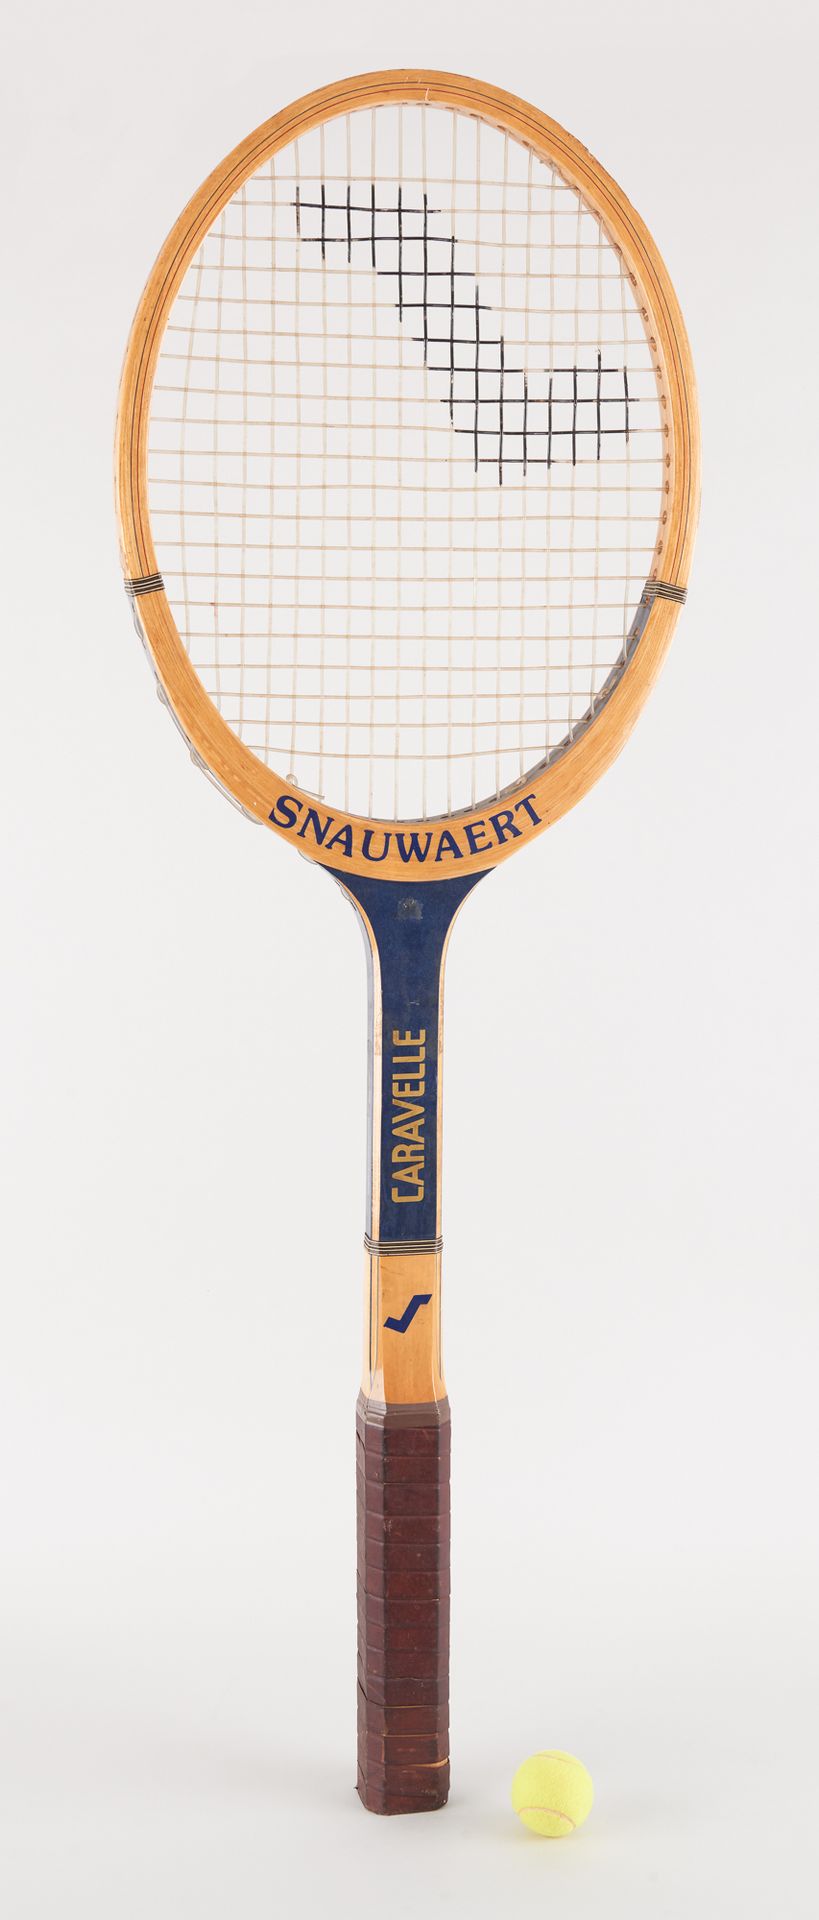 Snauwaert. Oggetto d'arte: Racchetta da tennis promozionale.

Marchio Snauwaert,&hellip;